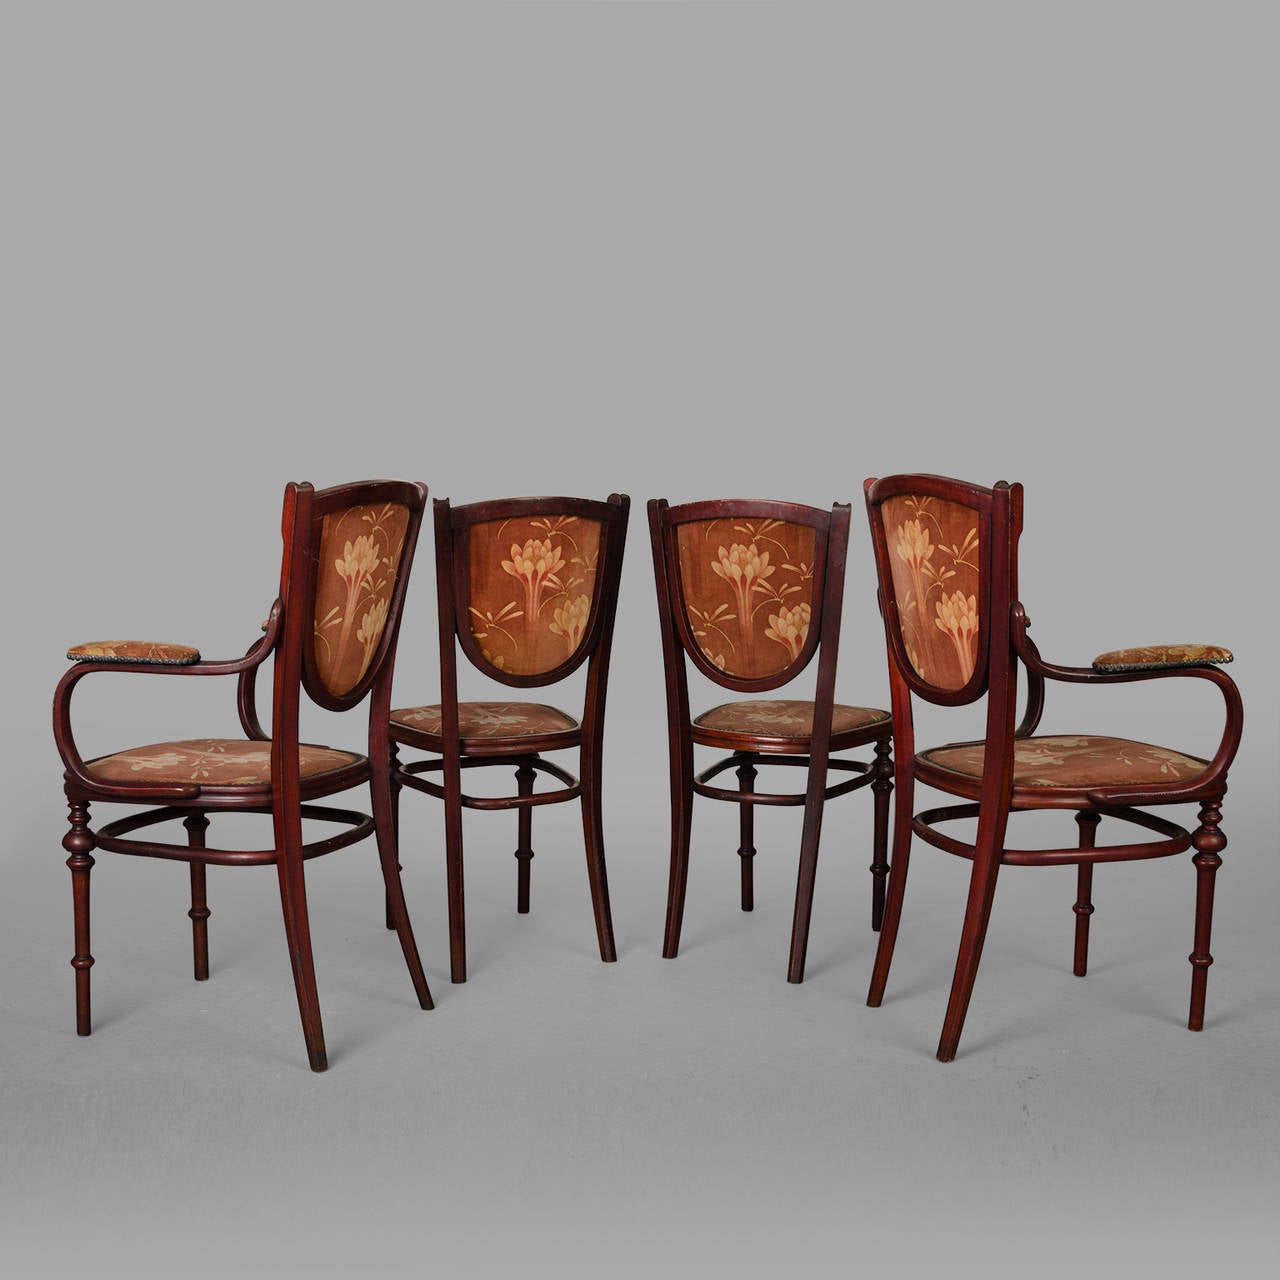 Austrian Small Art Nouveau Period Living Room Chairs, circa 1900